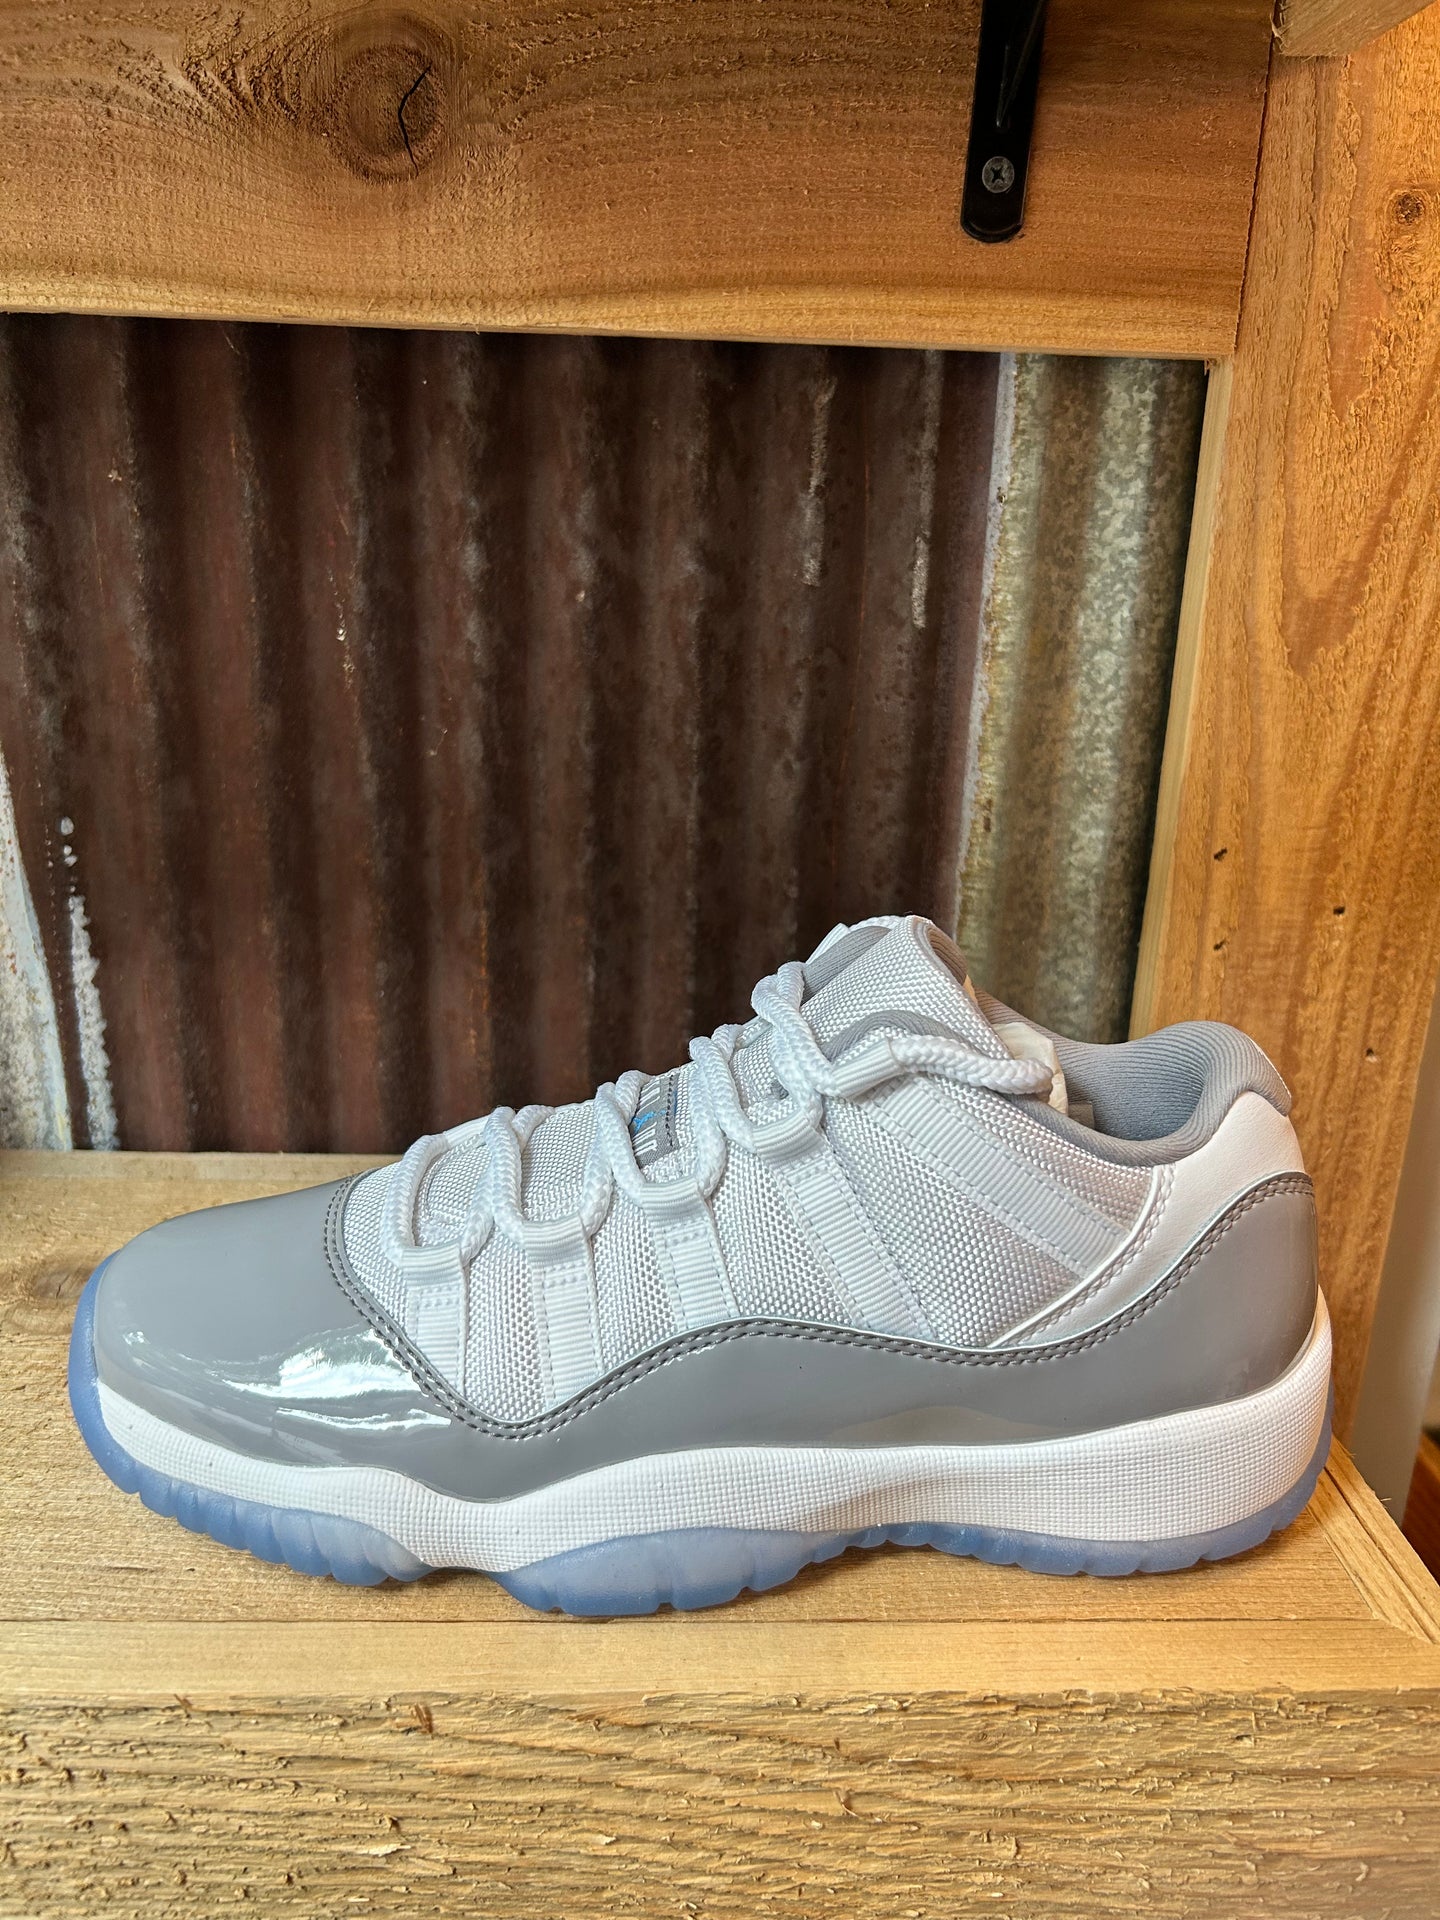 Jordan 11 Retro Low ‘ Cement Grey’